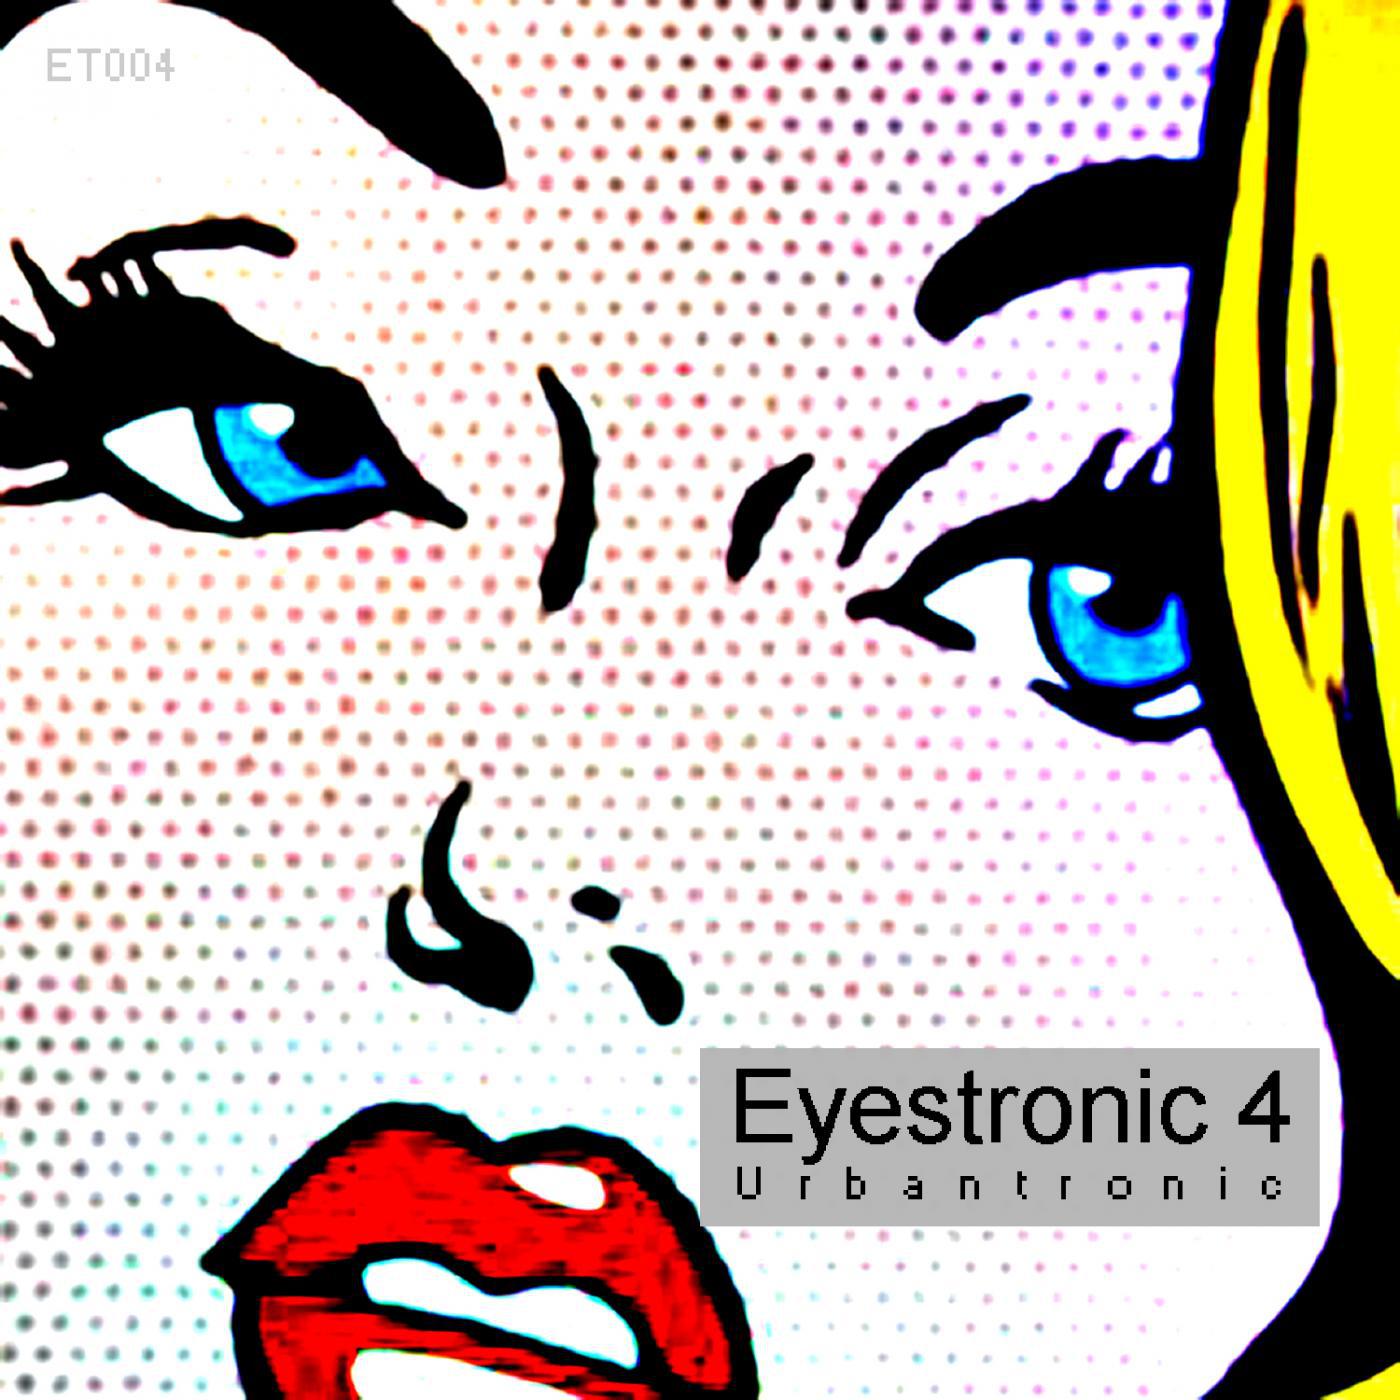 Eyestronic 4